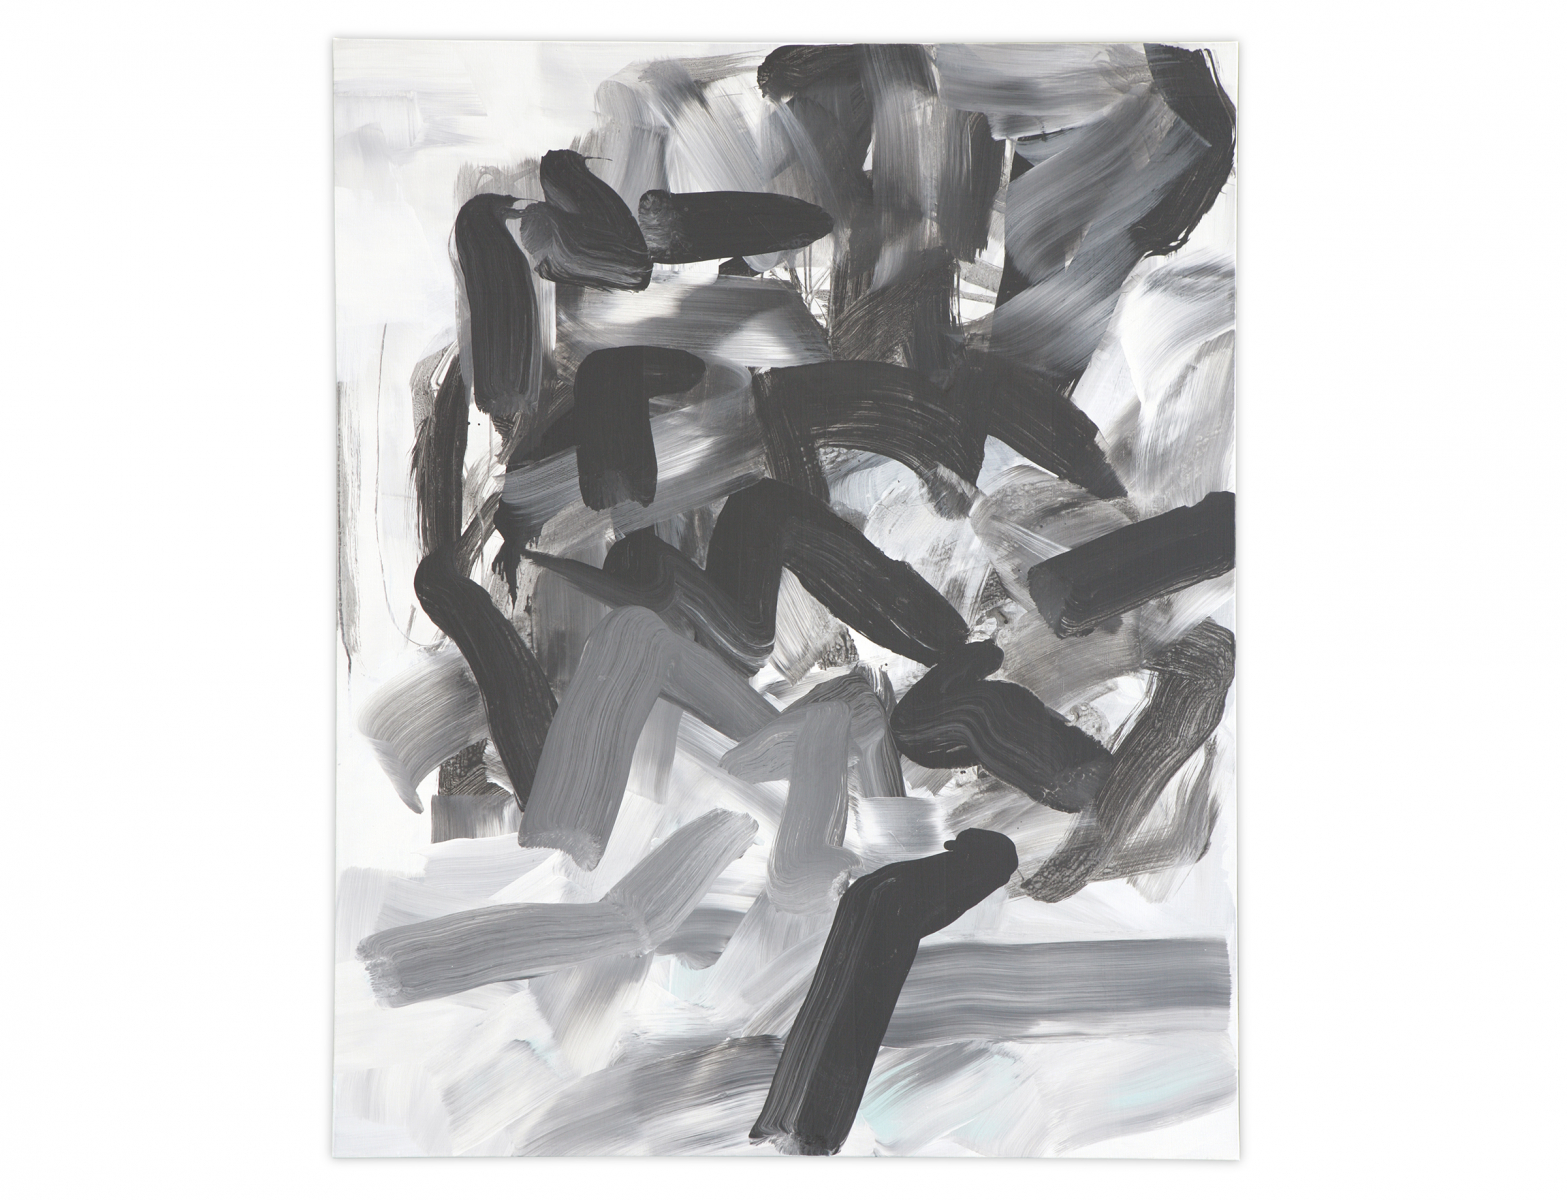 Emptiness-13038, 2013, Acrylic on Canvas, 162x130.3cm
